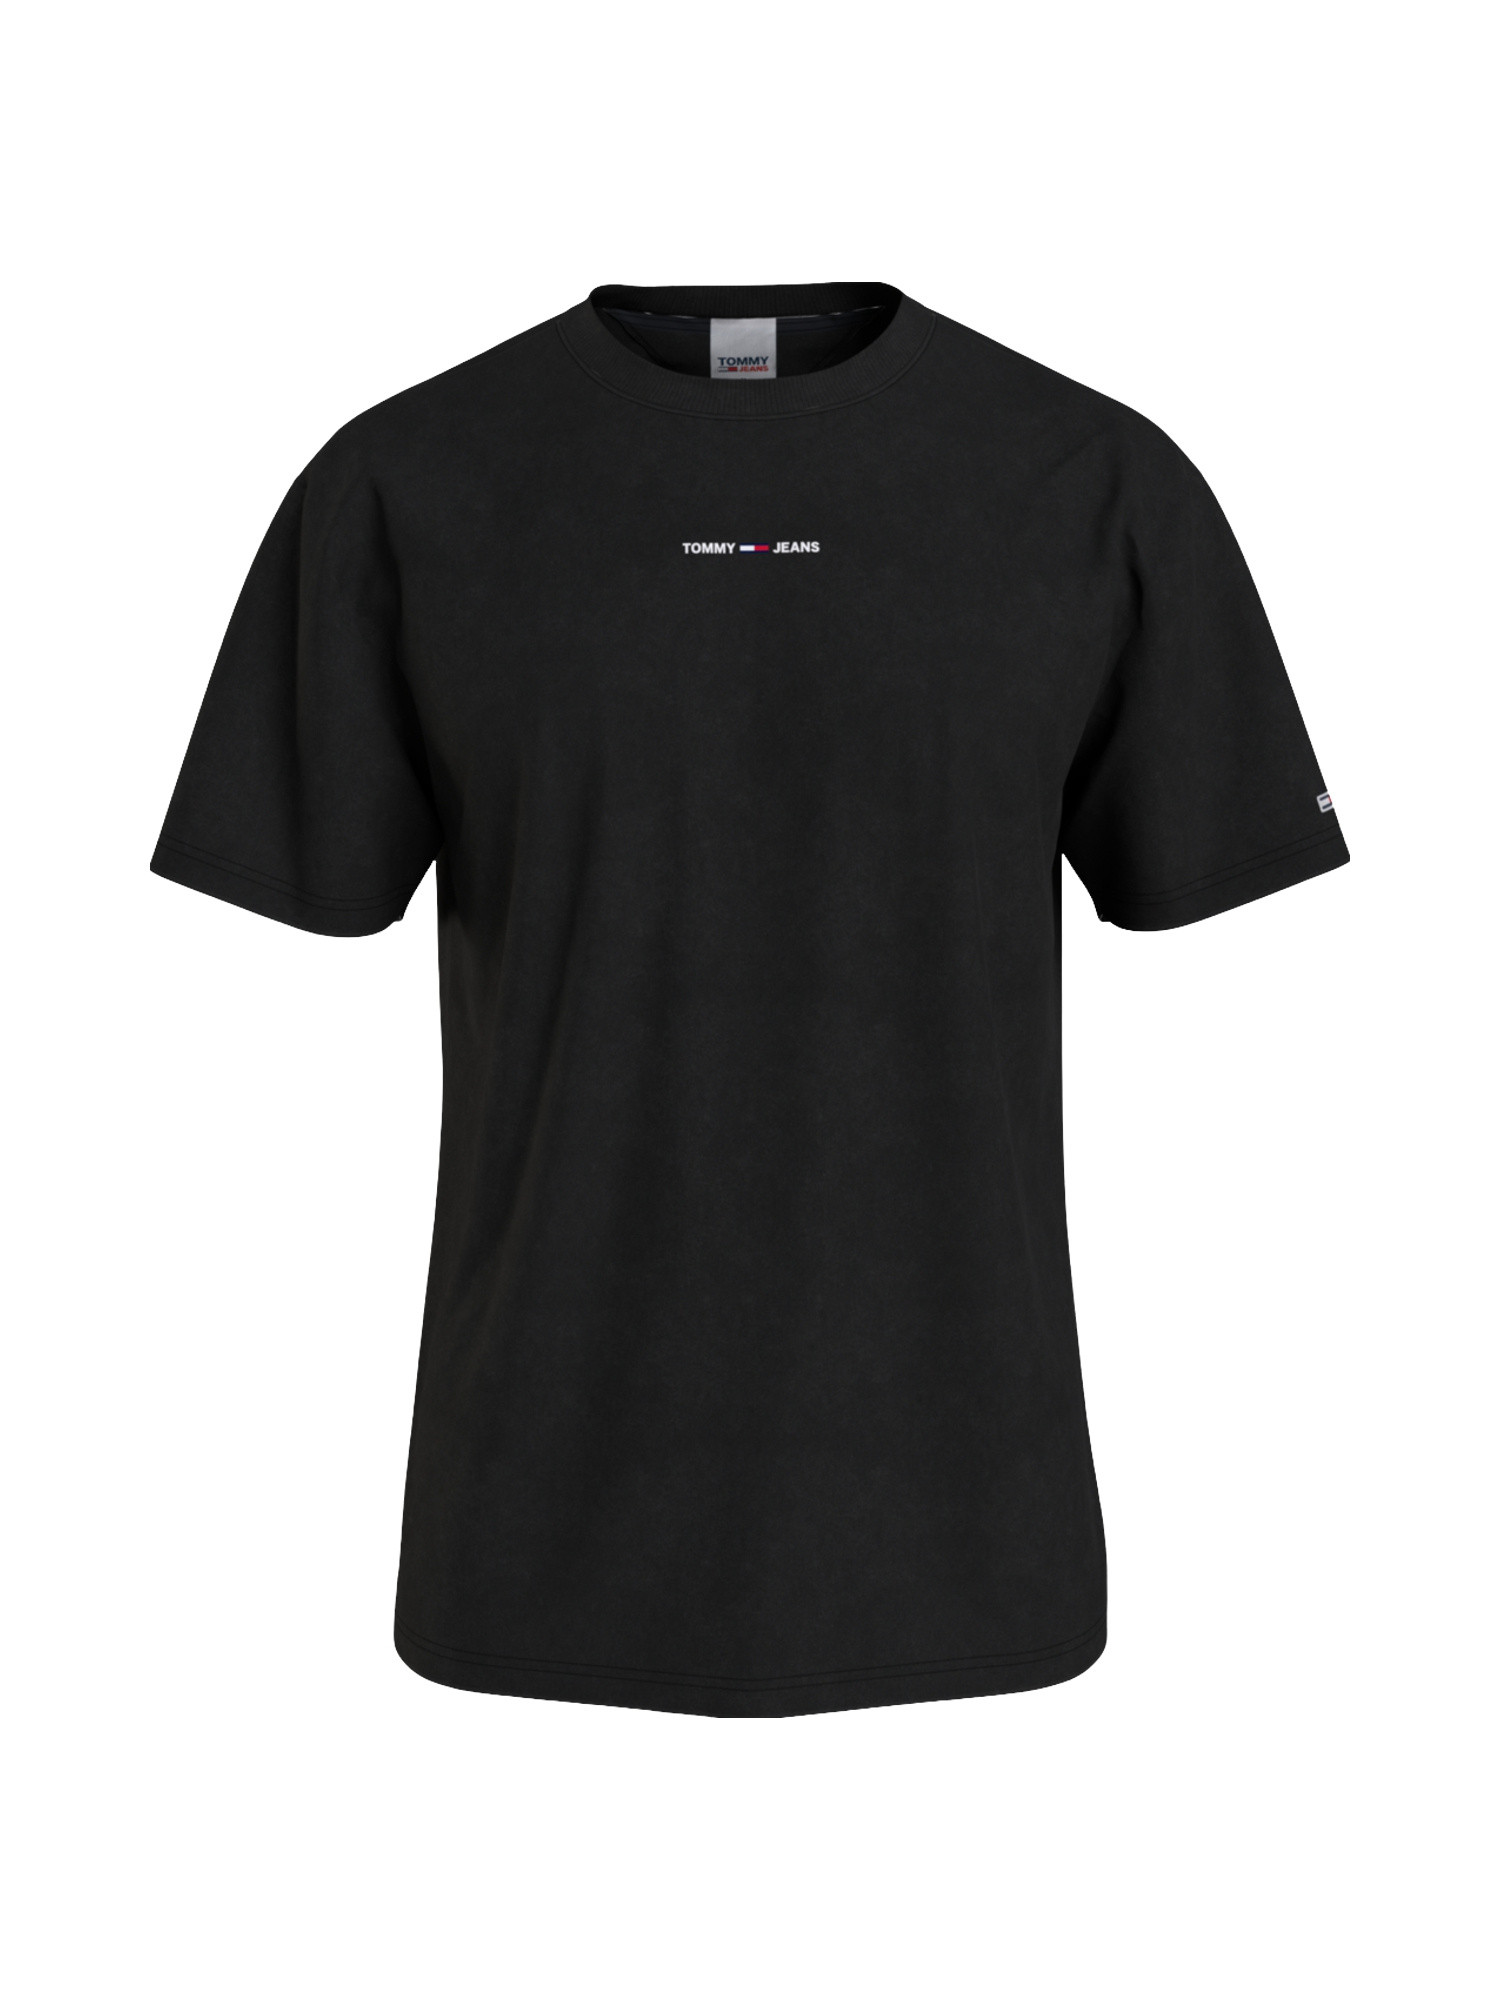 T-shirt with logo, Black, large image number 0